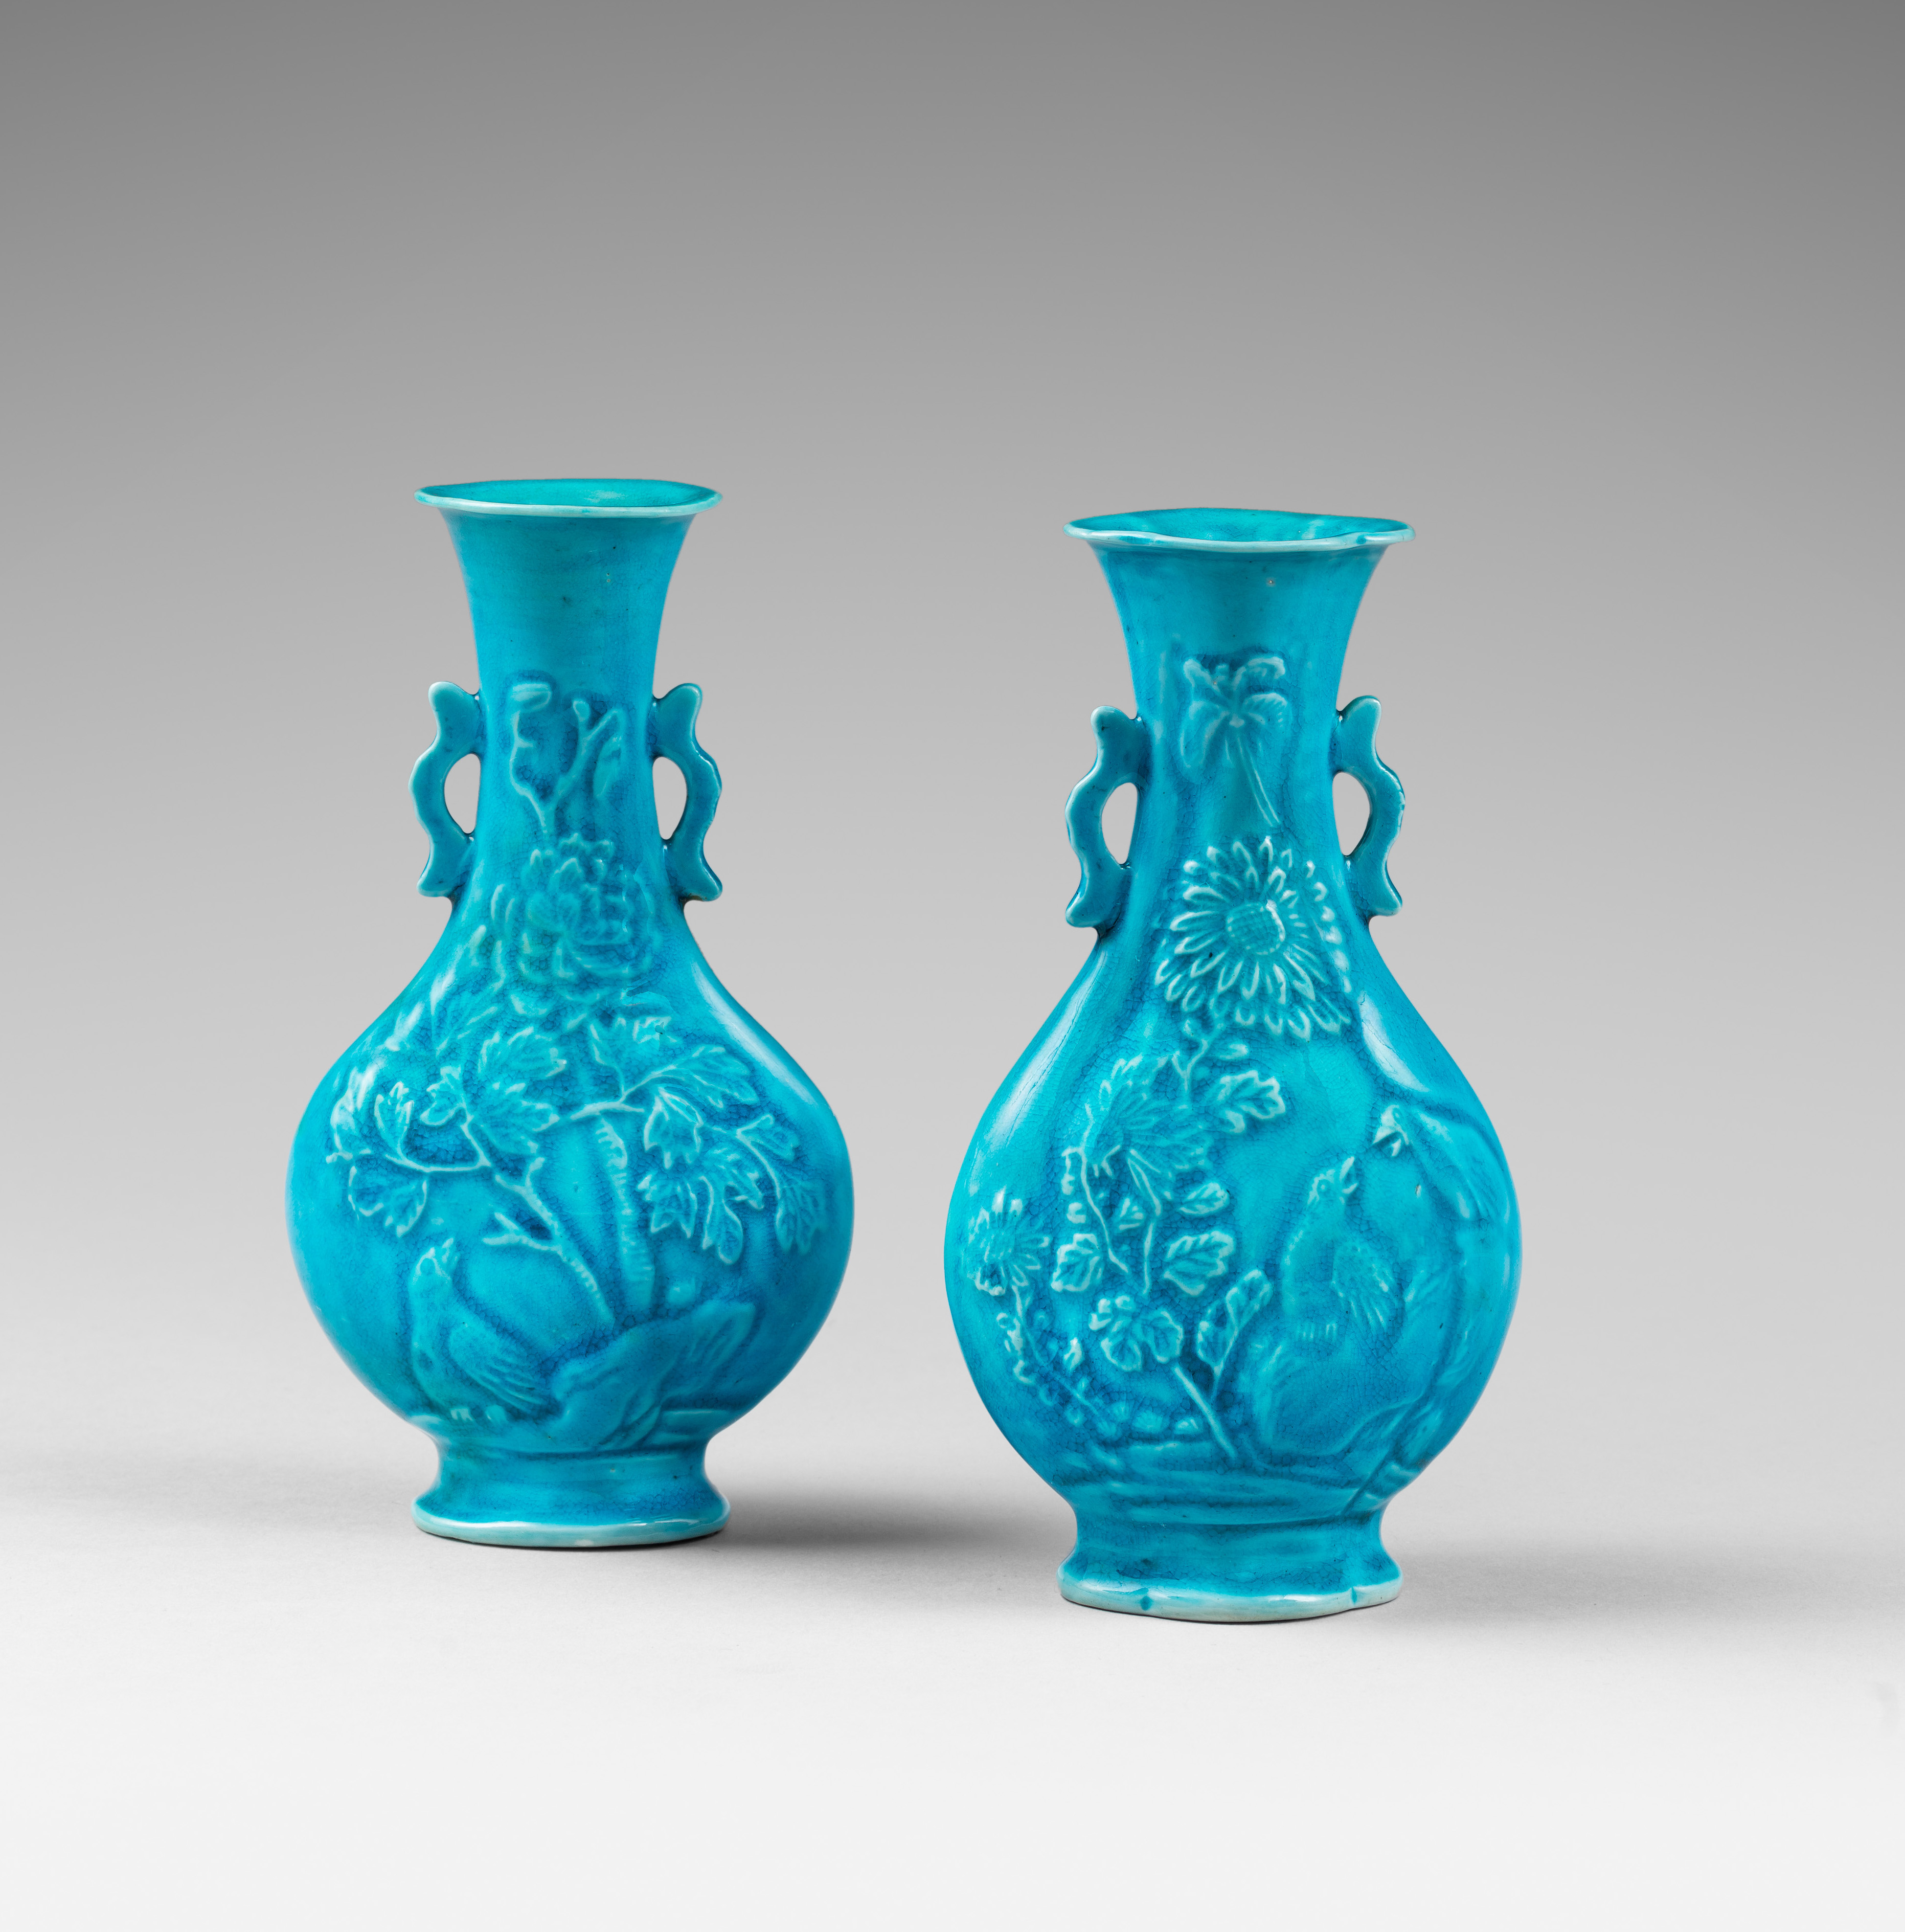 Porcelain Kangxi period (1662-1722), China